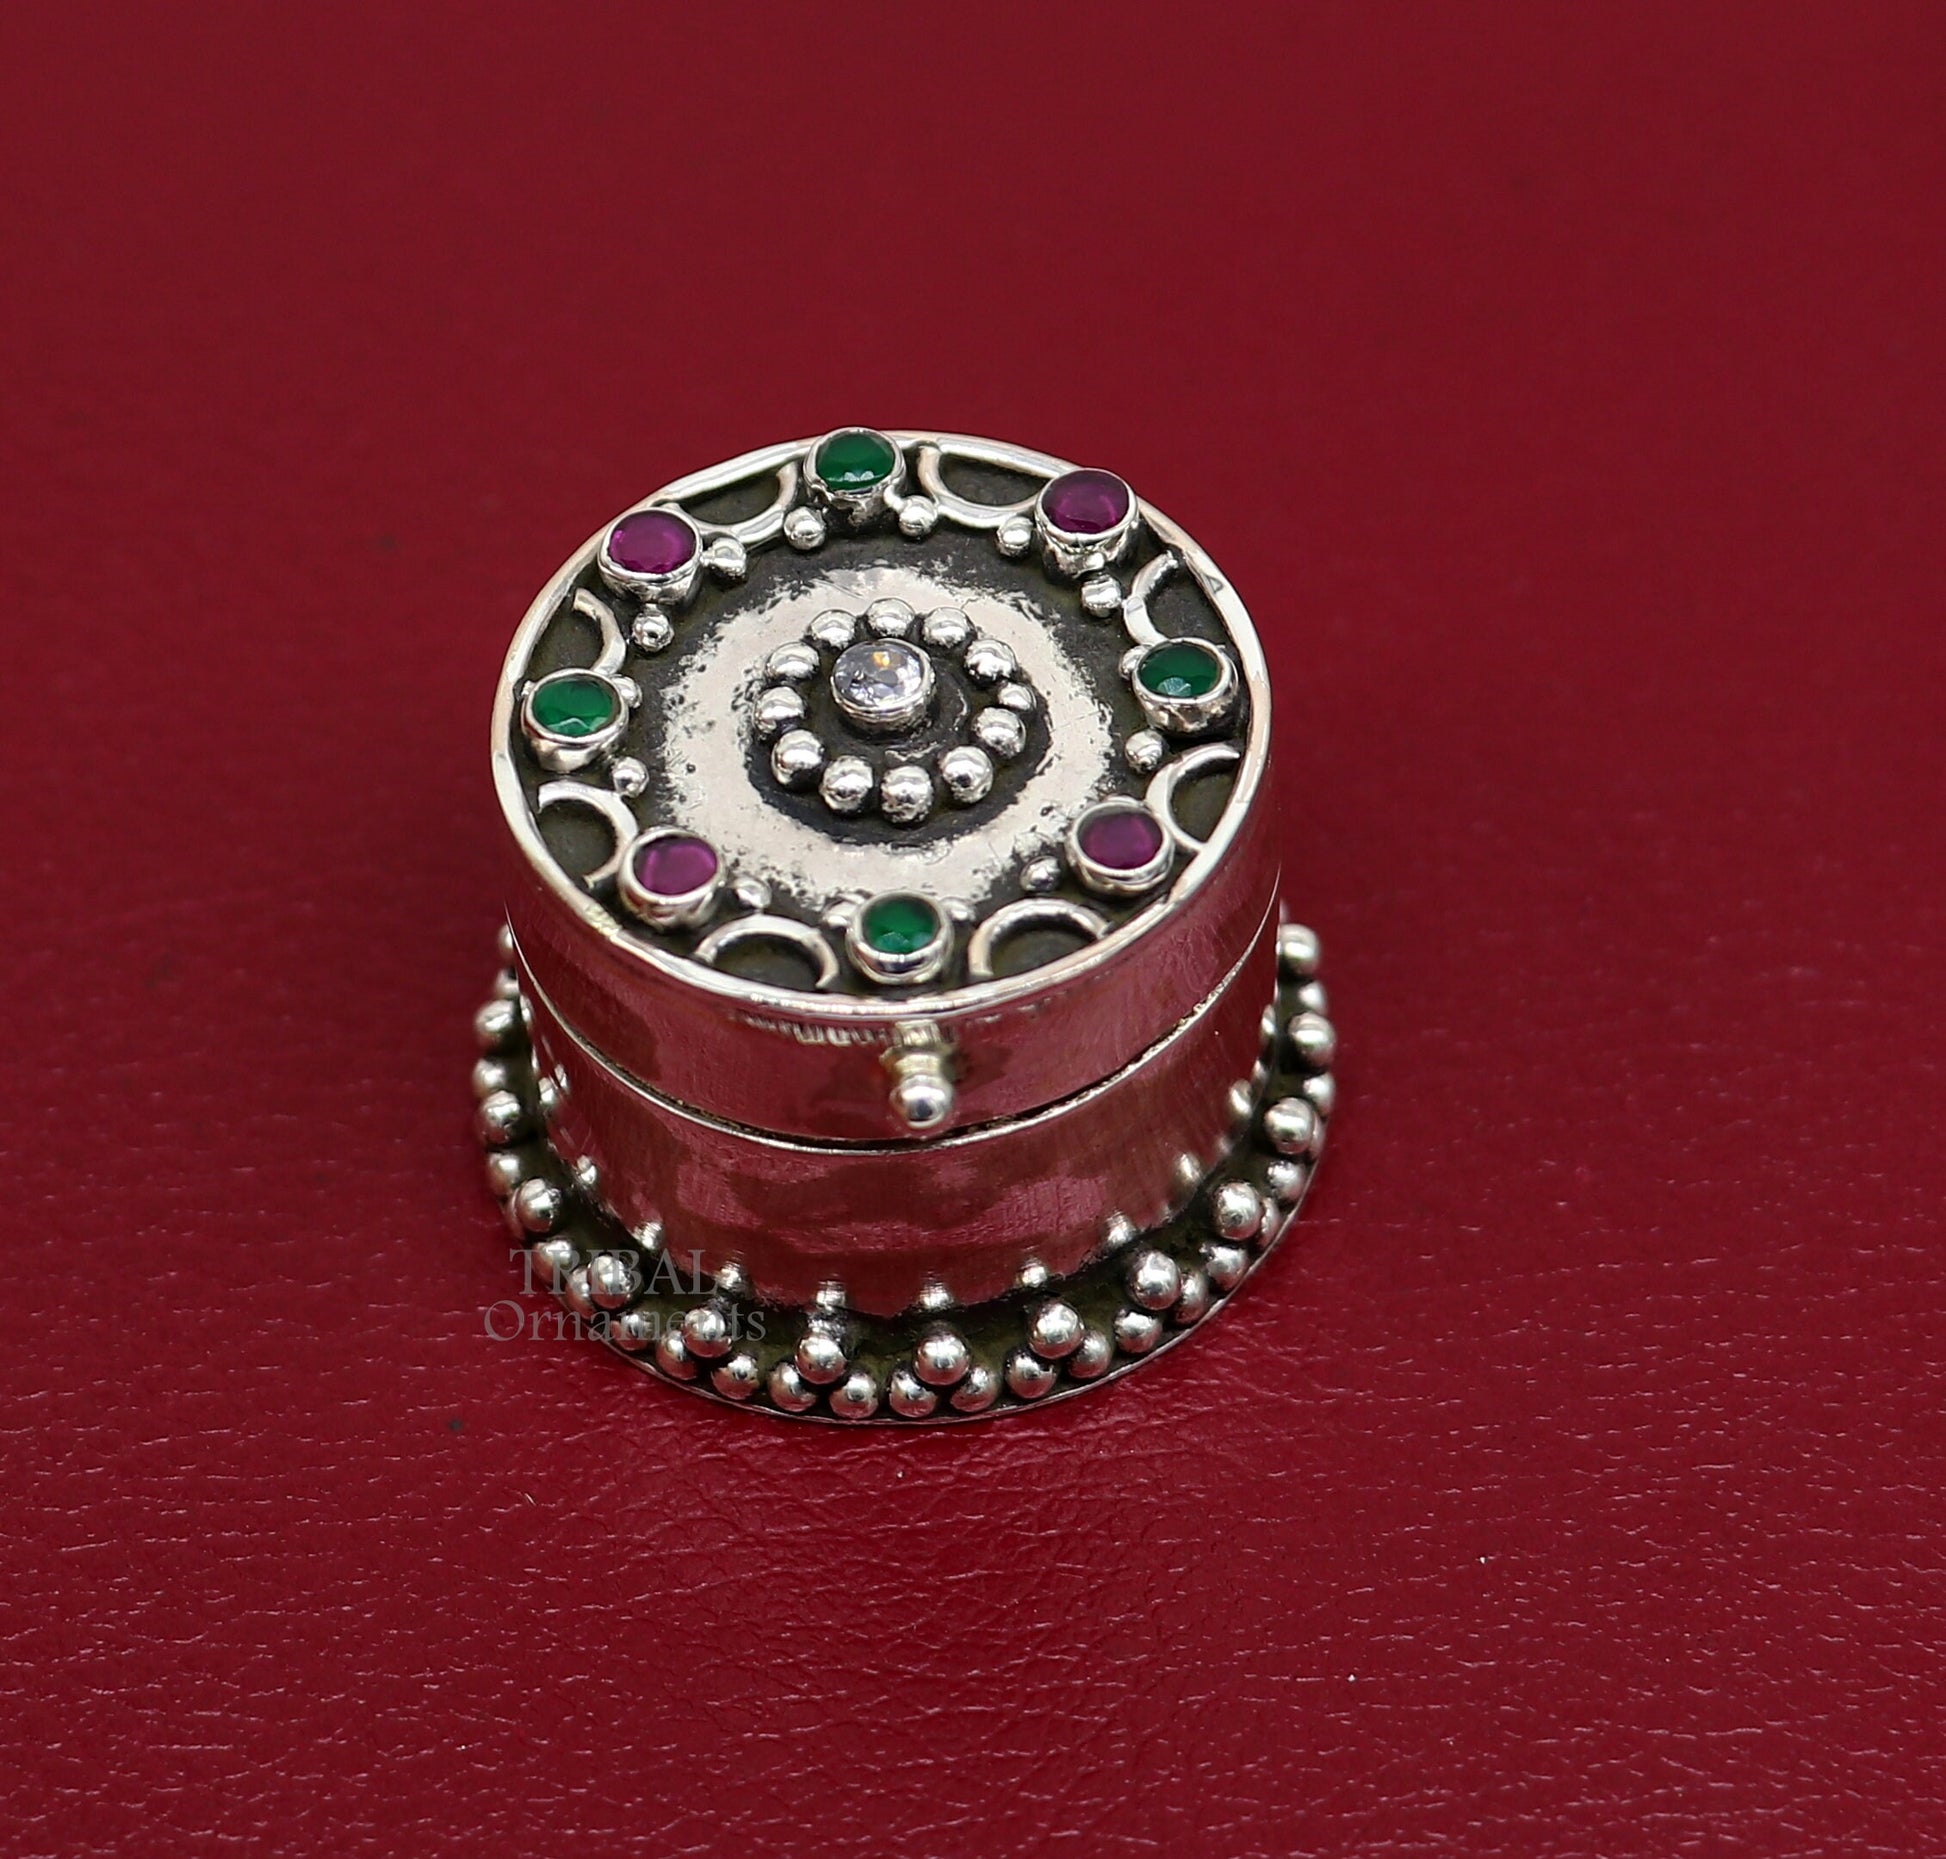 925 sterling silver handcrafted round shape design red stone work trinket box, kajal eyeliner box, Sindur box brides gift silver box stb761 - TRIBAL ORNAMENTS